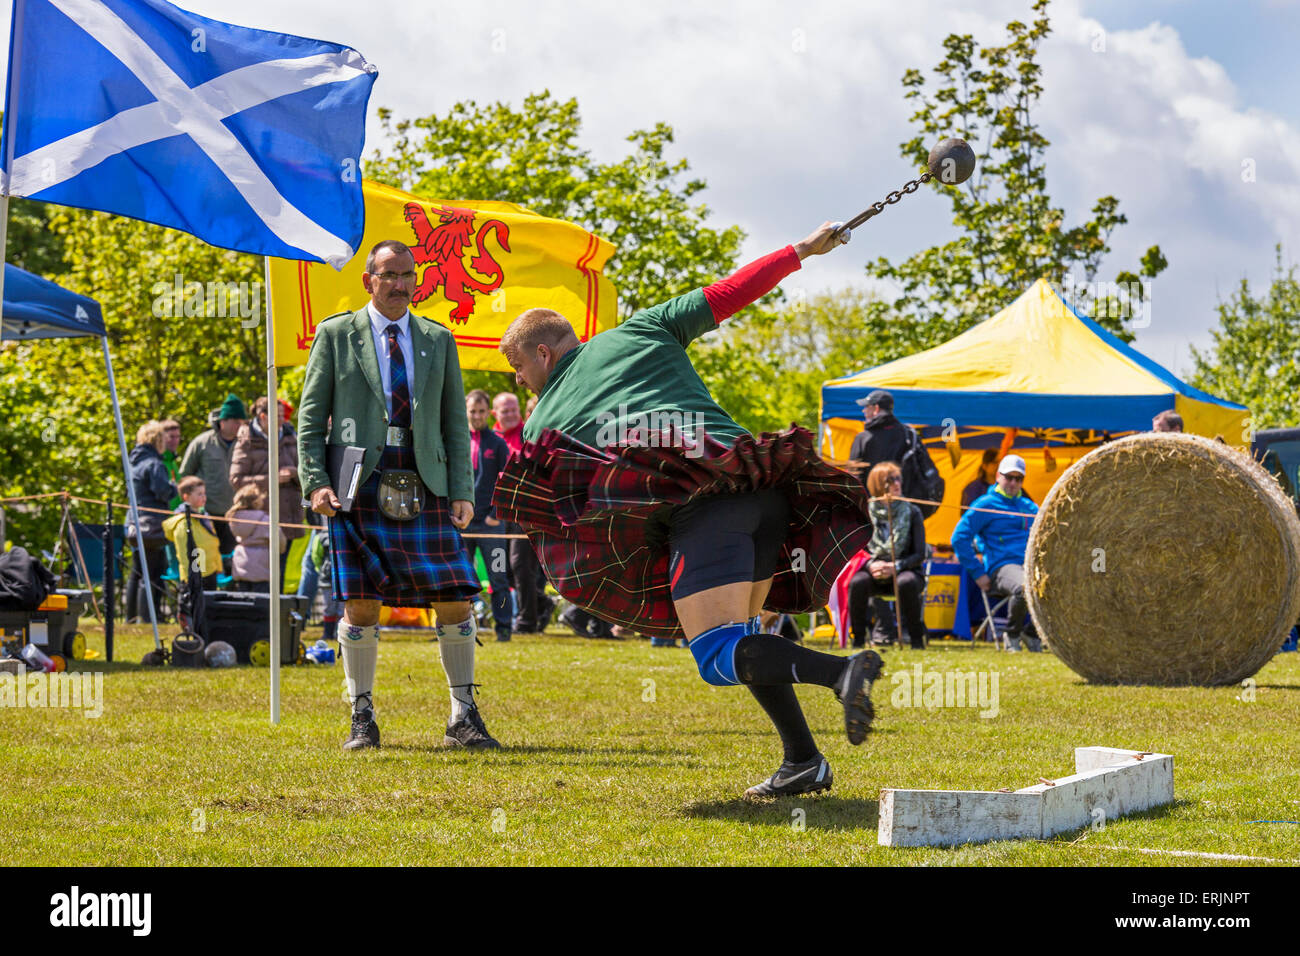 Competitor in the Carmunnock Highland games throwing the weight, Carmunnock, near Glasgow, Scotland, UK Stock Photo